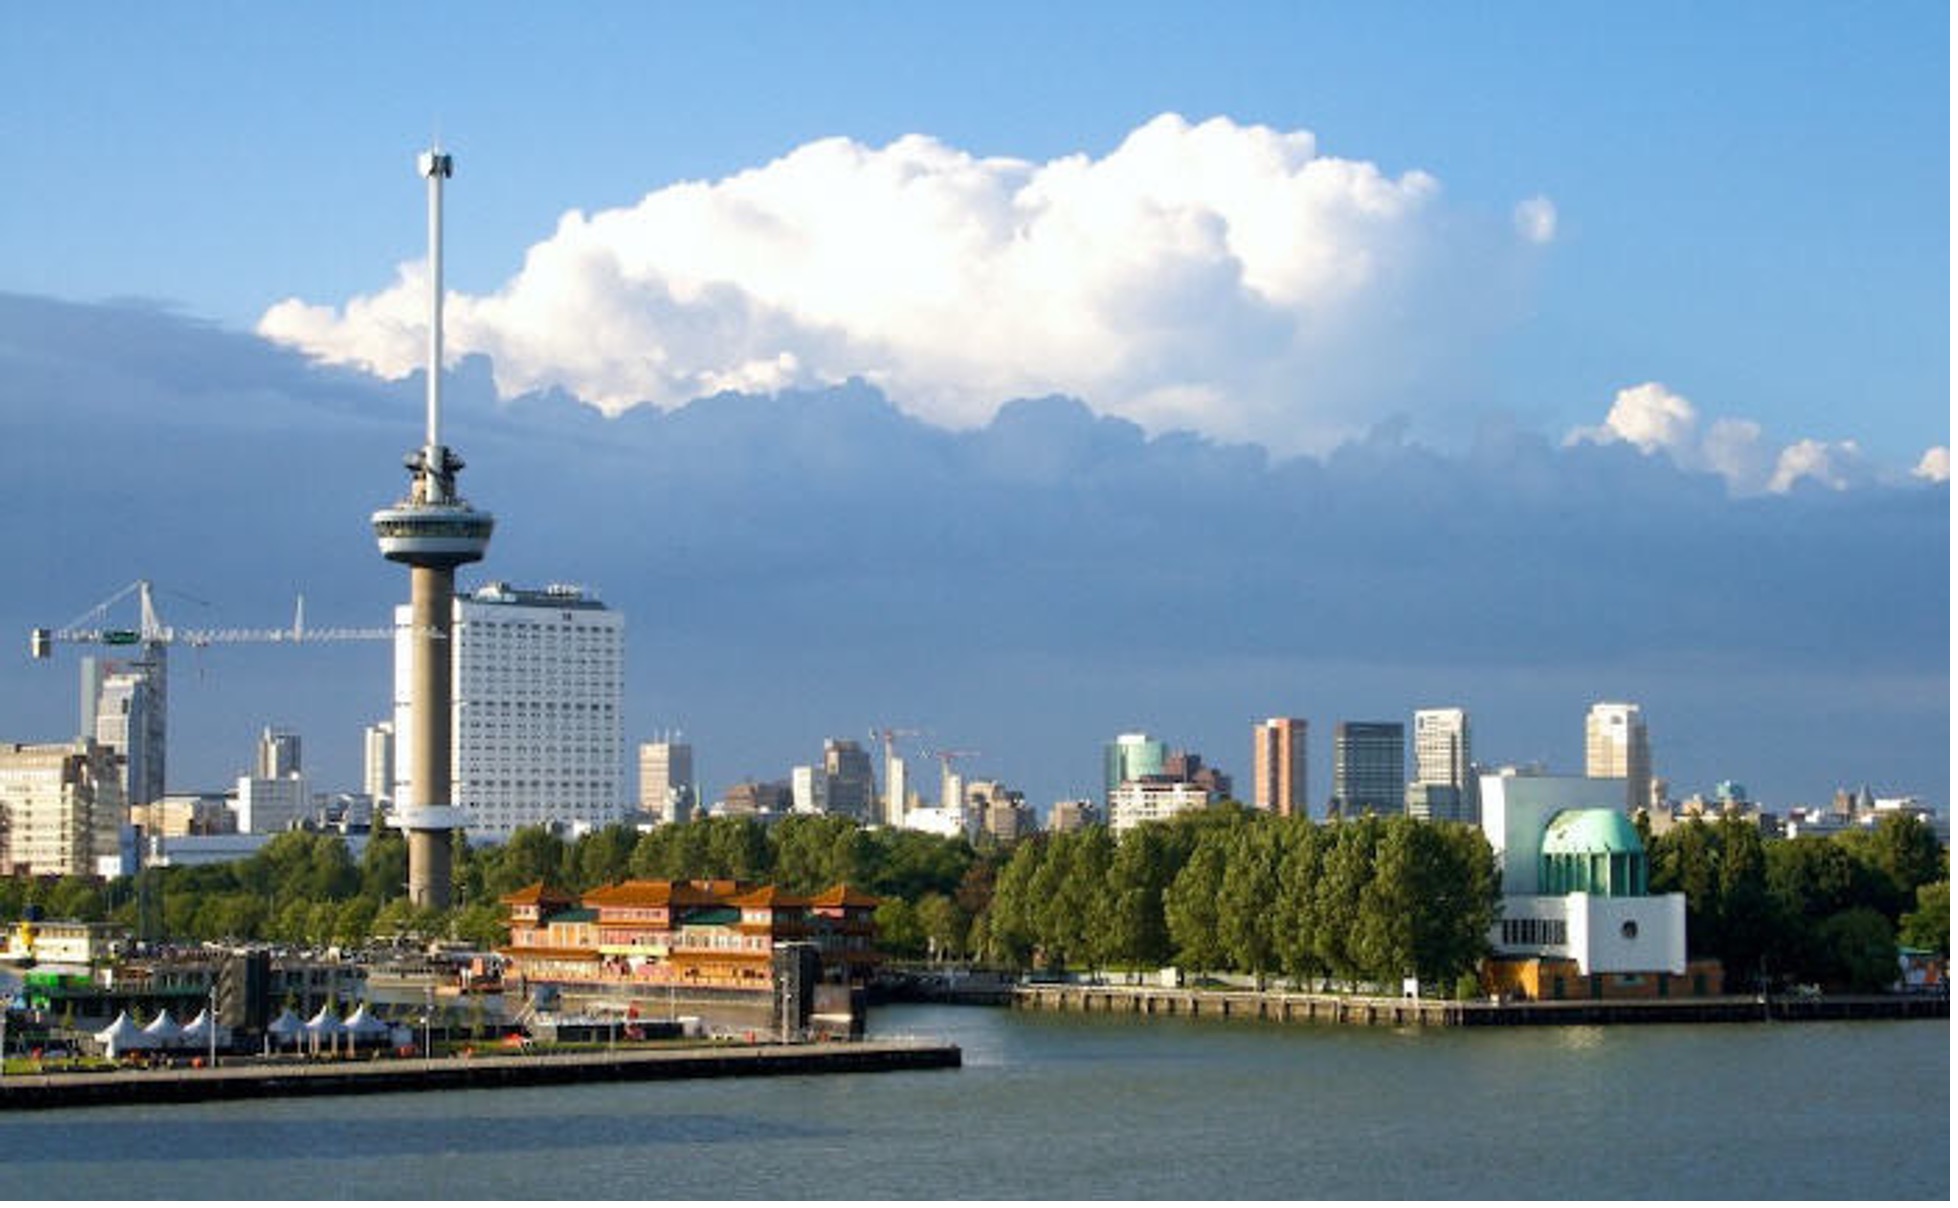 Skyline of Rotterdam, Netherlands